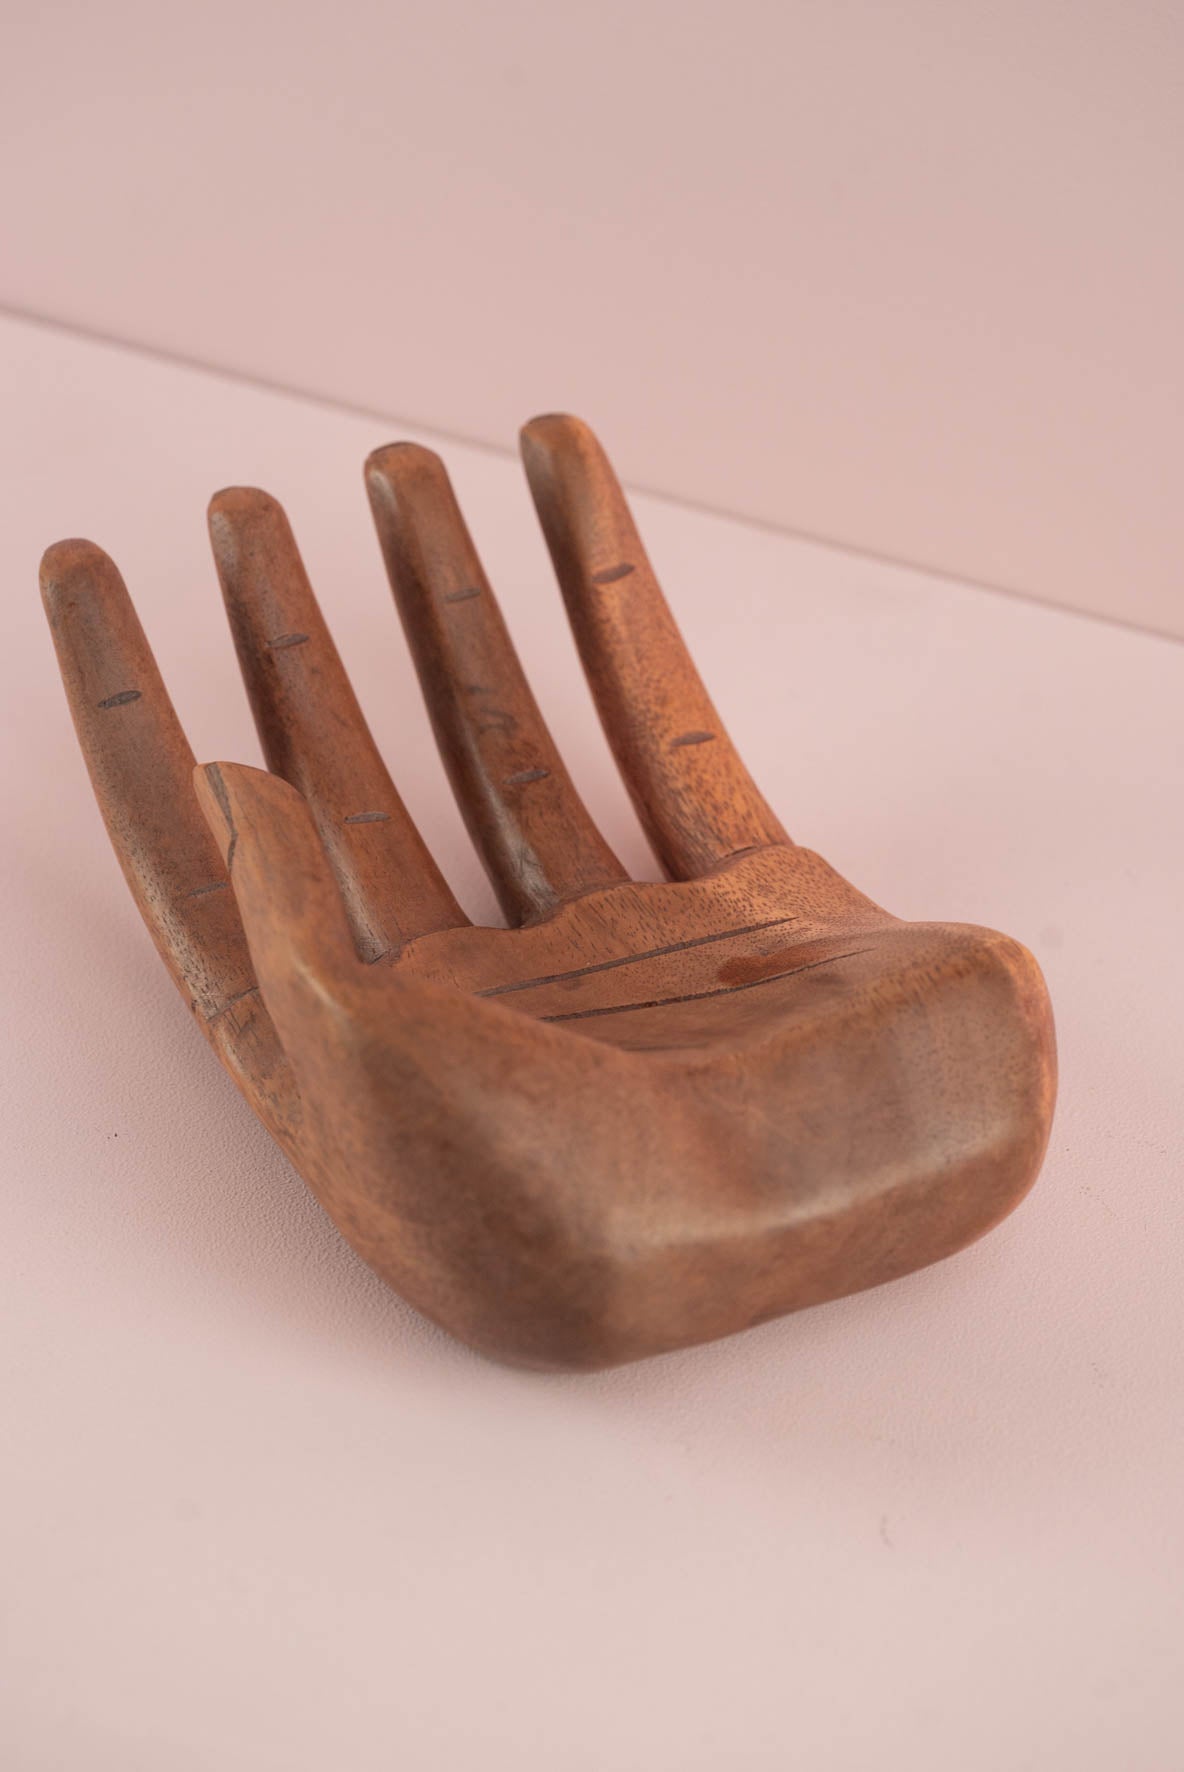 Wooden hand